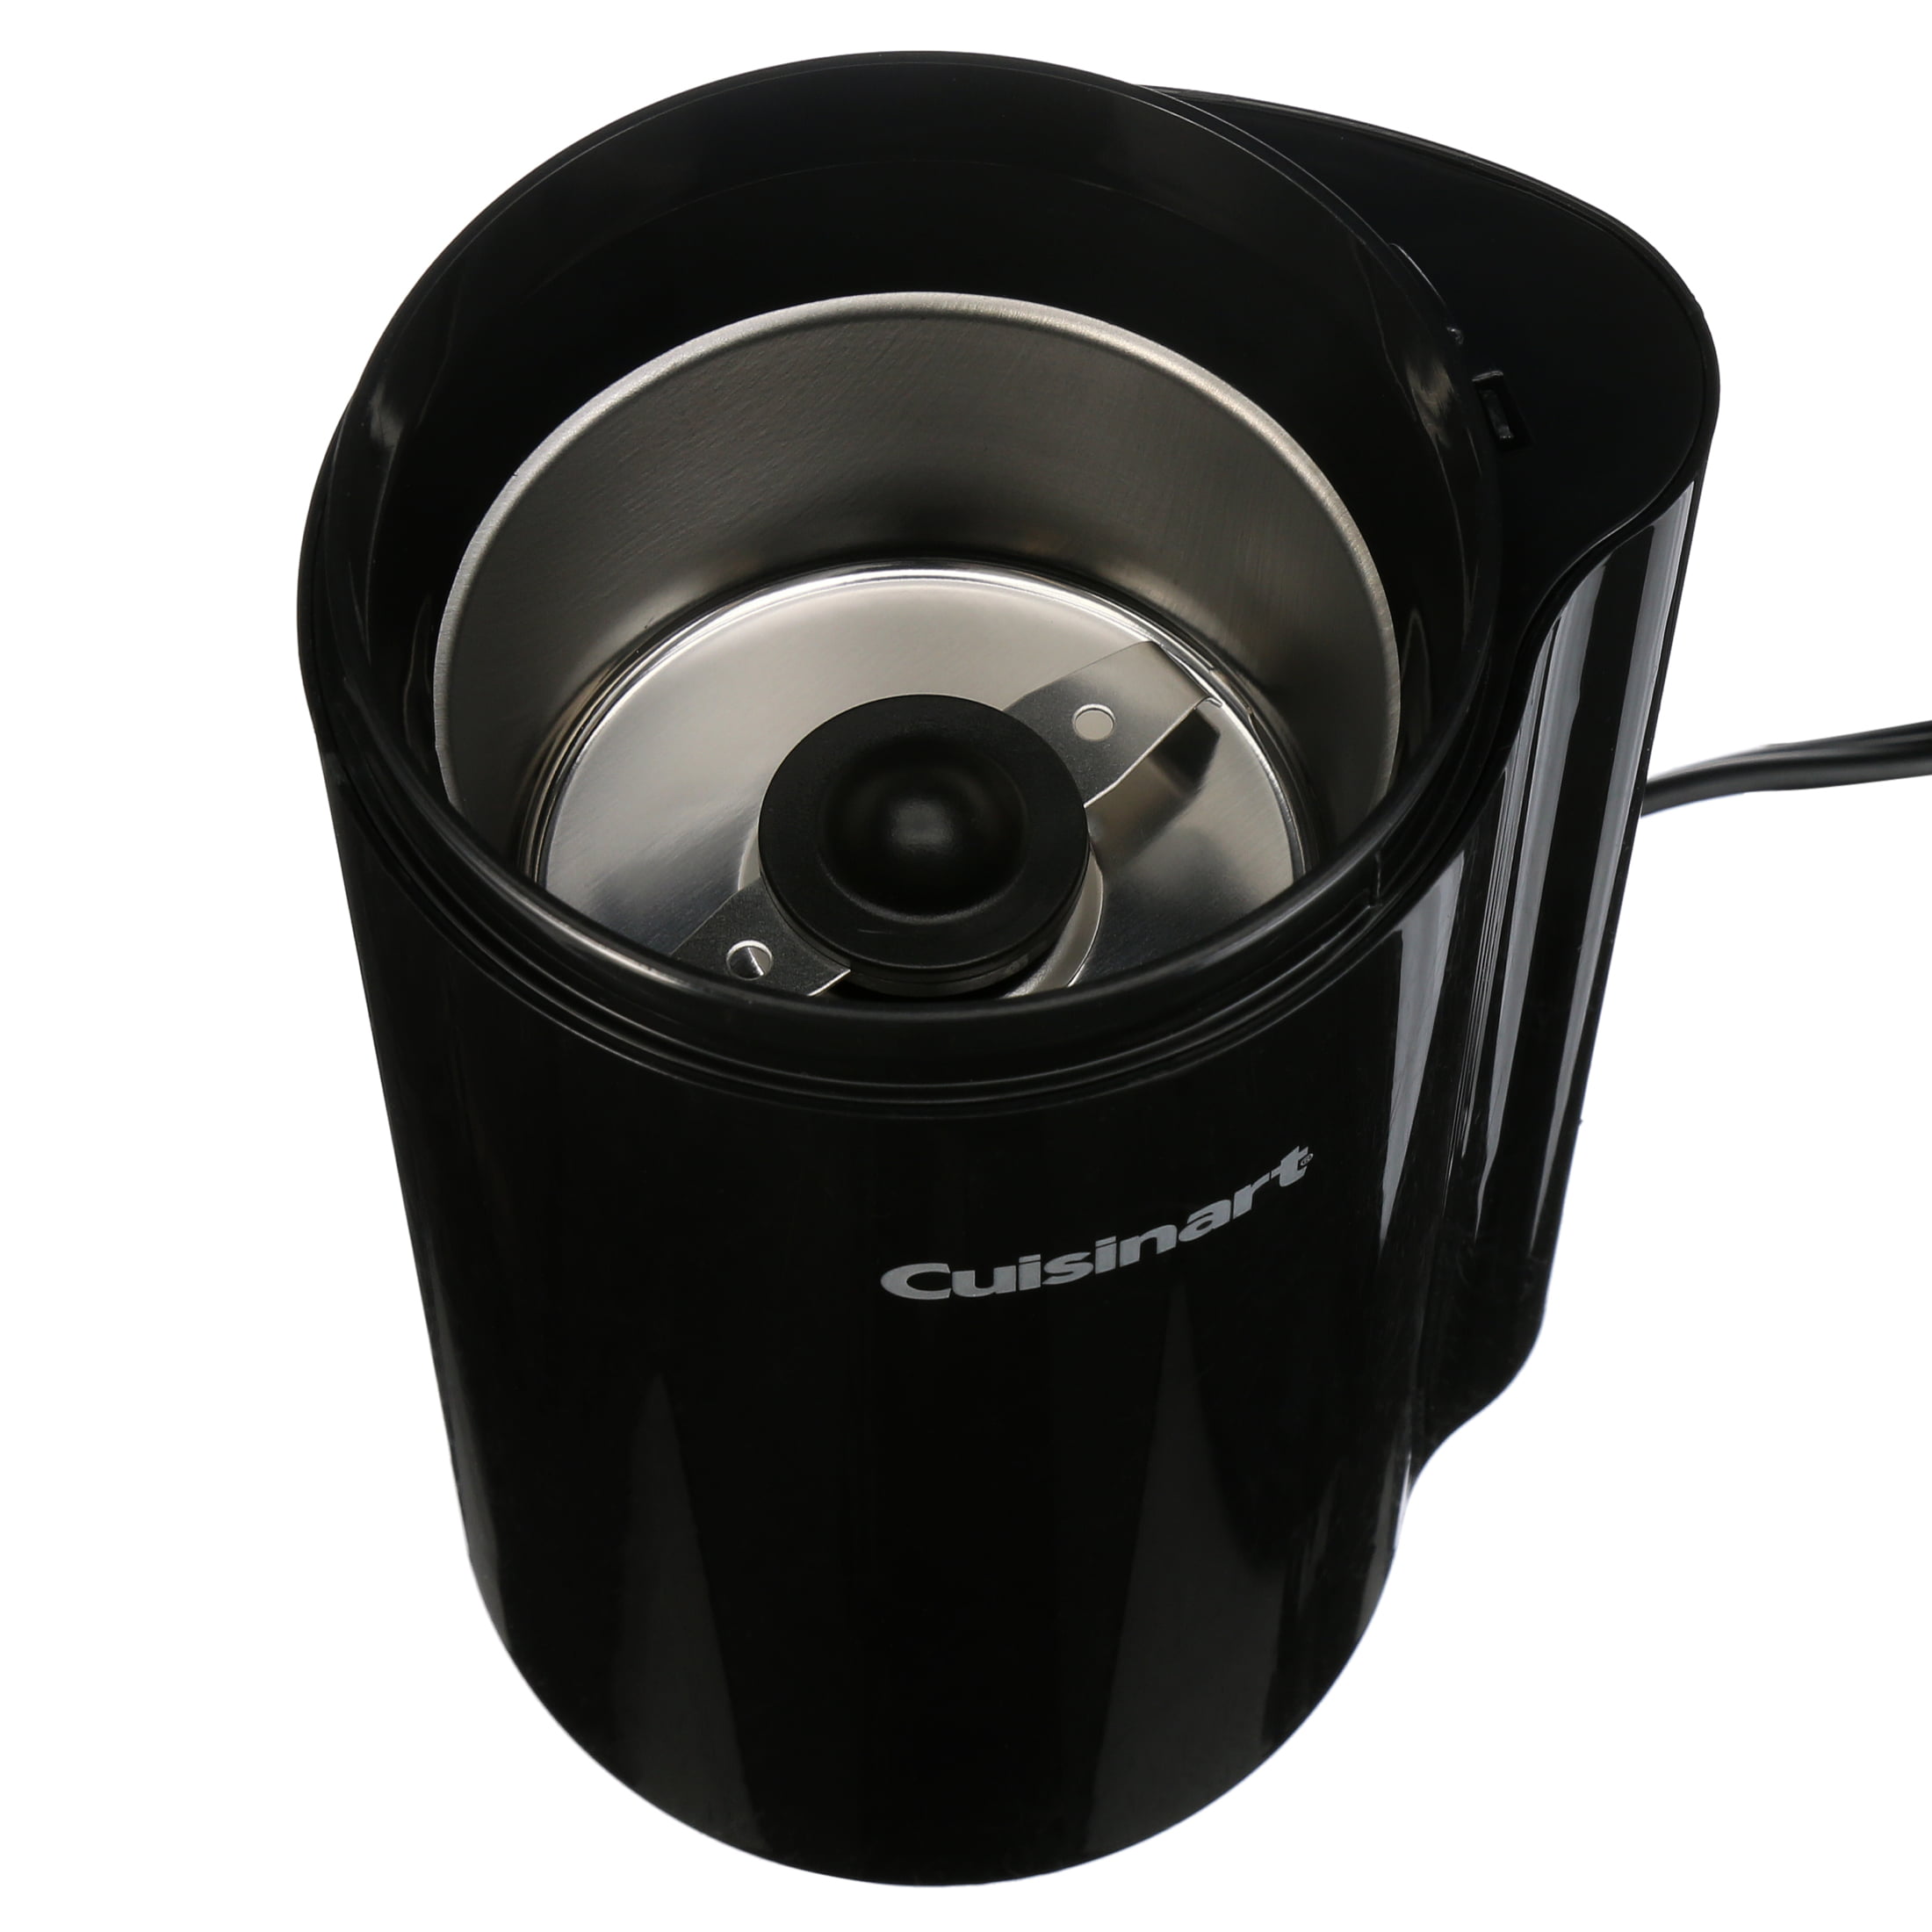 Cuisinart Electric Coffee Grinder - Black - DCG-20BKNTG